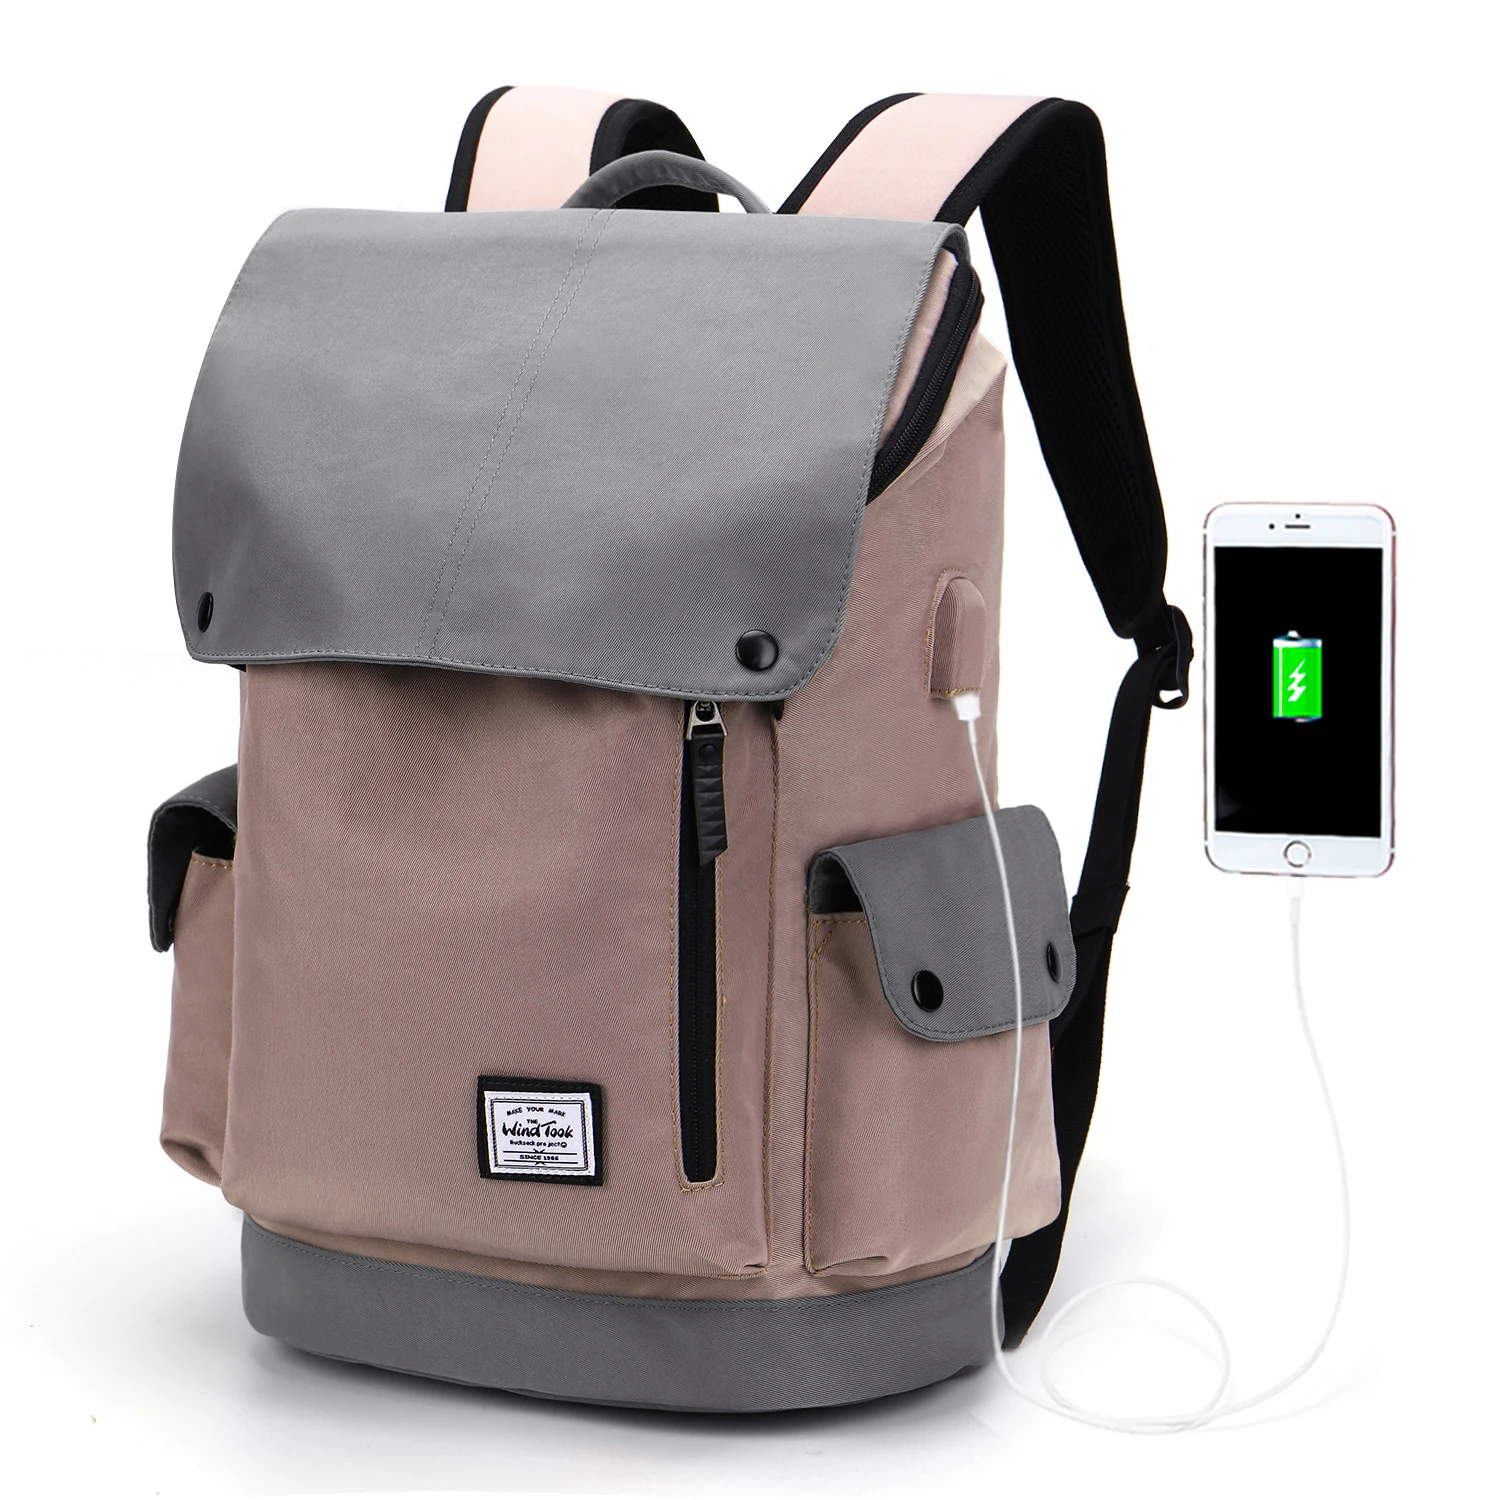 

WindTook Laptop Backpack for Women Travel Computer Bag USB Charging Port 15.4 Laptop Waterproof School Fashion Backpack for Girl